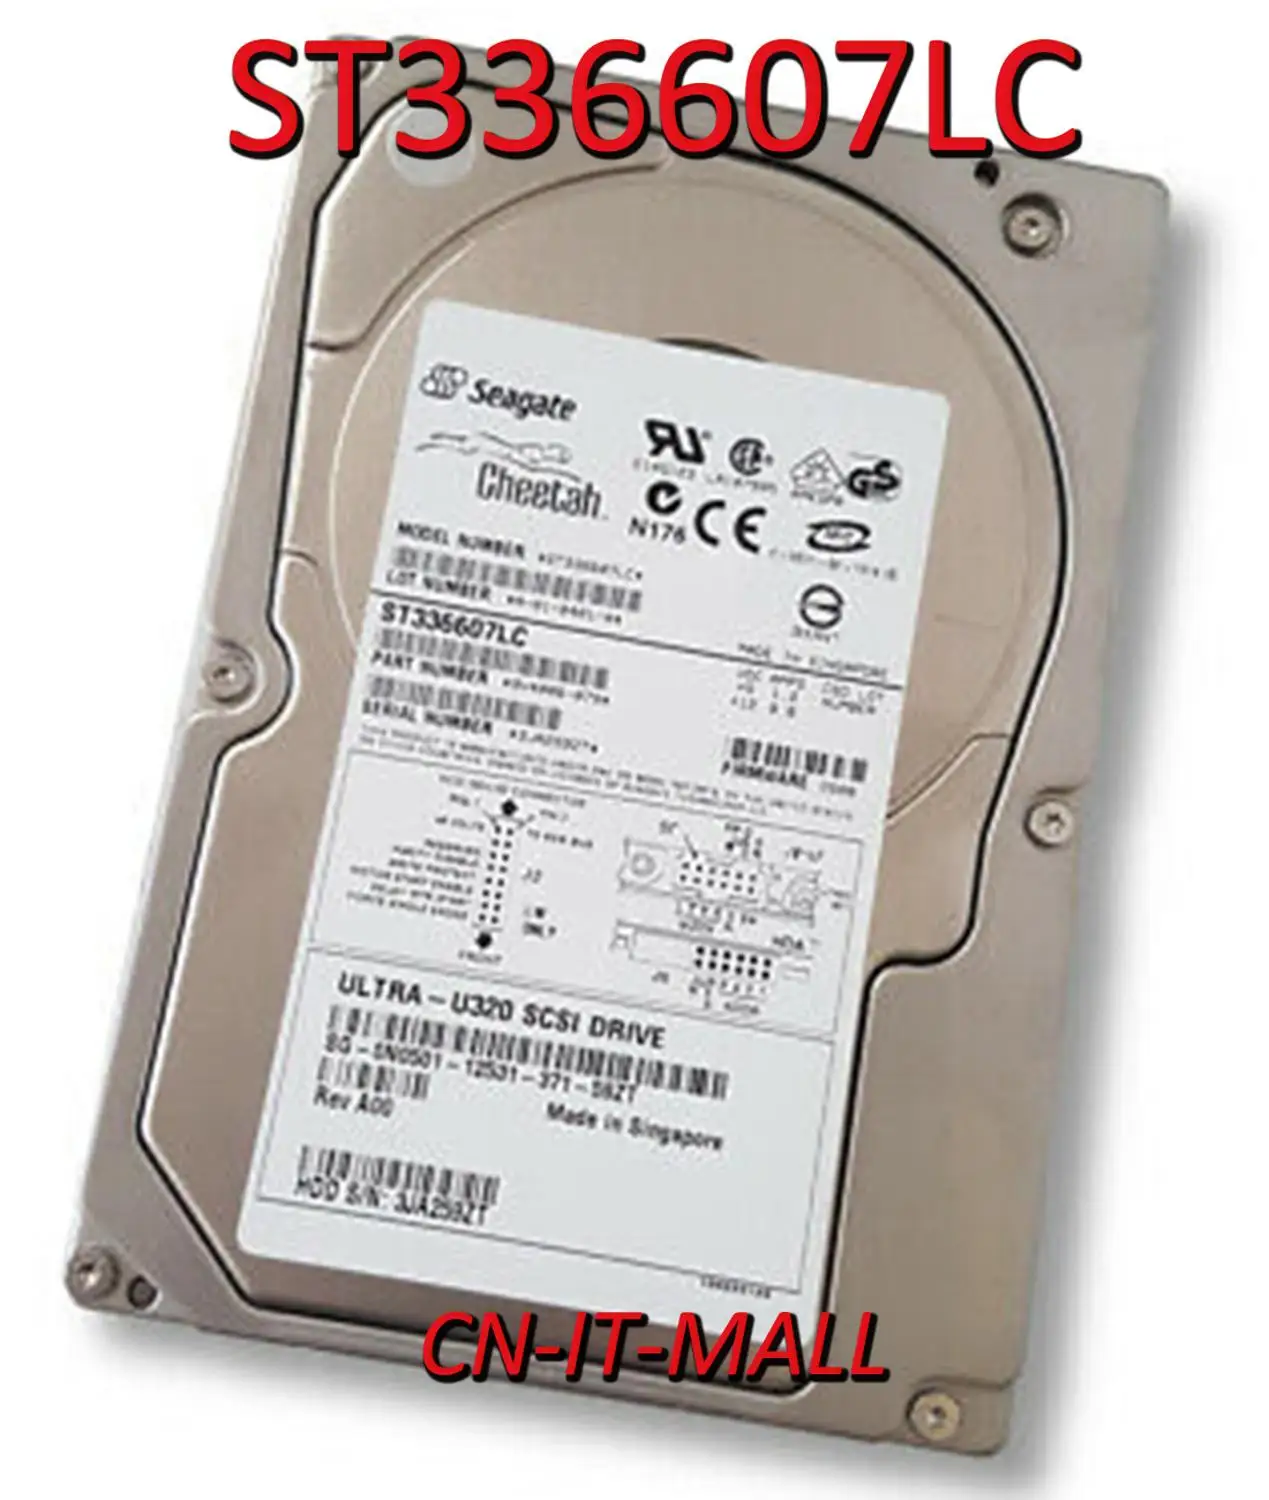 Seagate Cheetah ST336607LC 36GB 10000 RPM Ultra320 80Pin SCSI 3.5  Internal Hard Drive